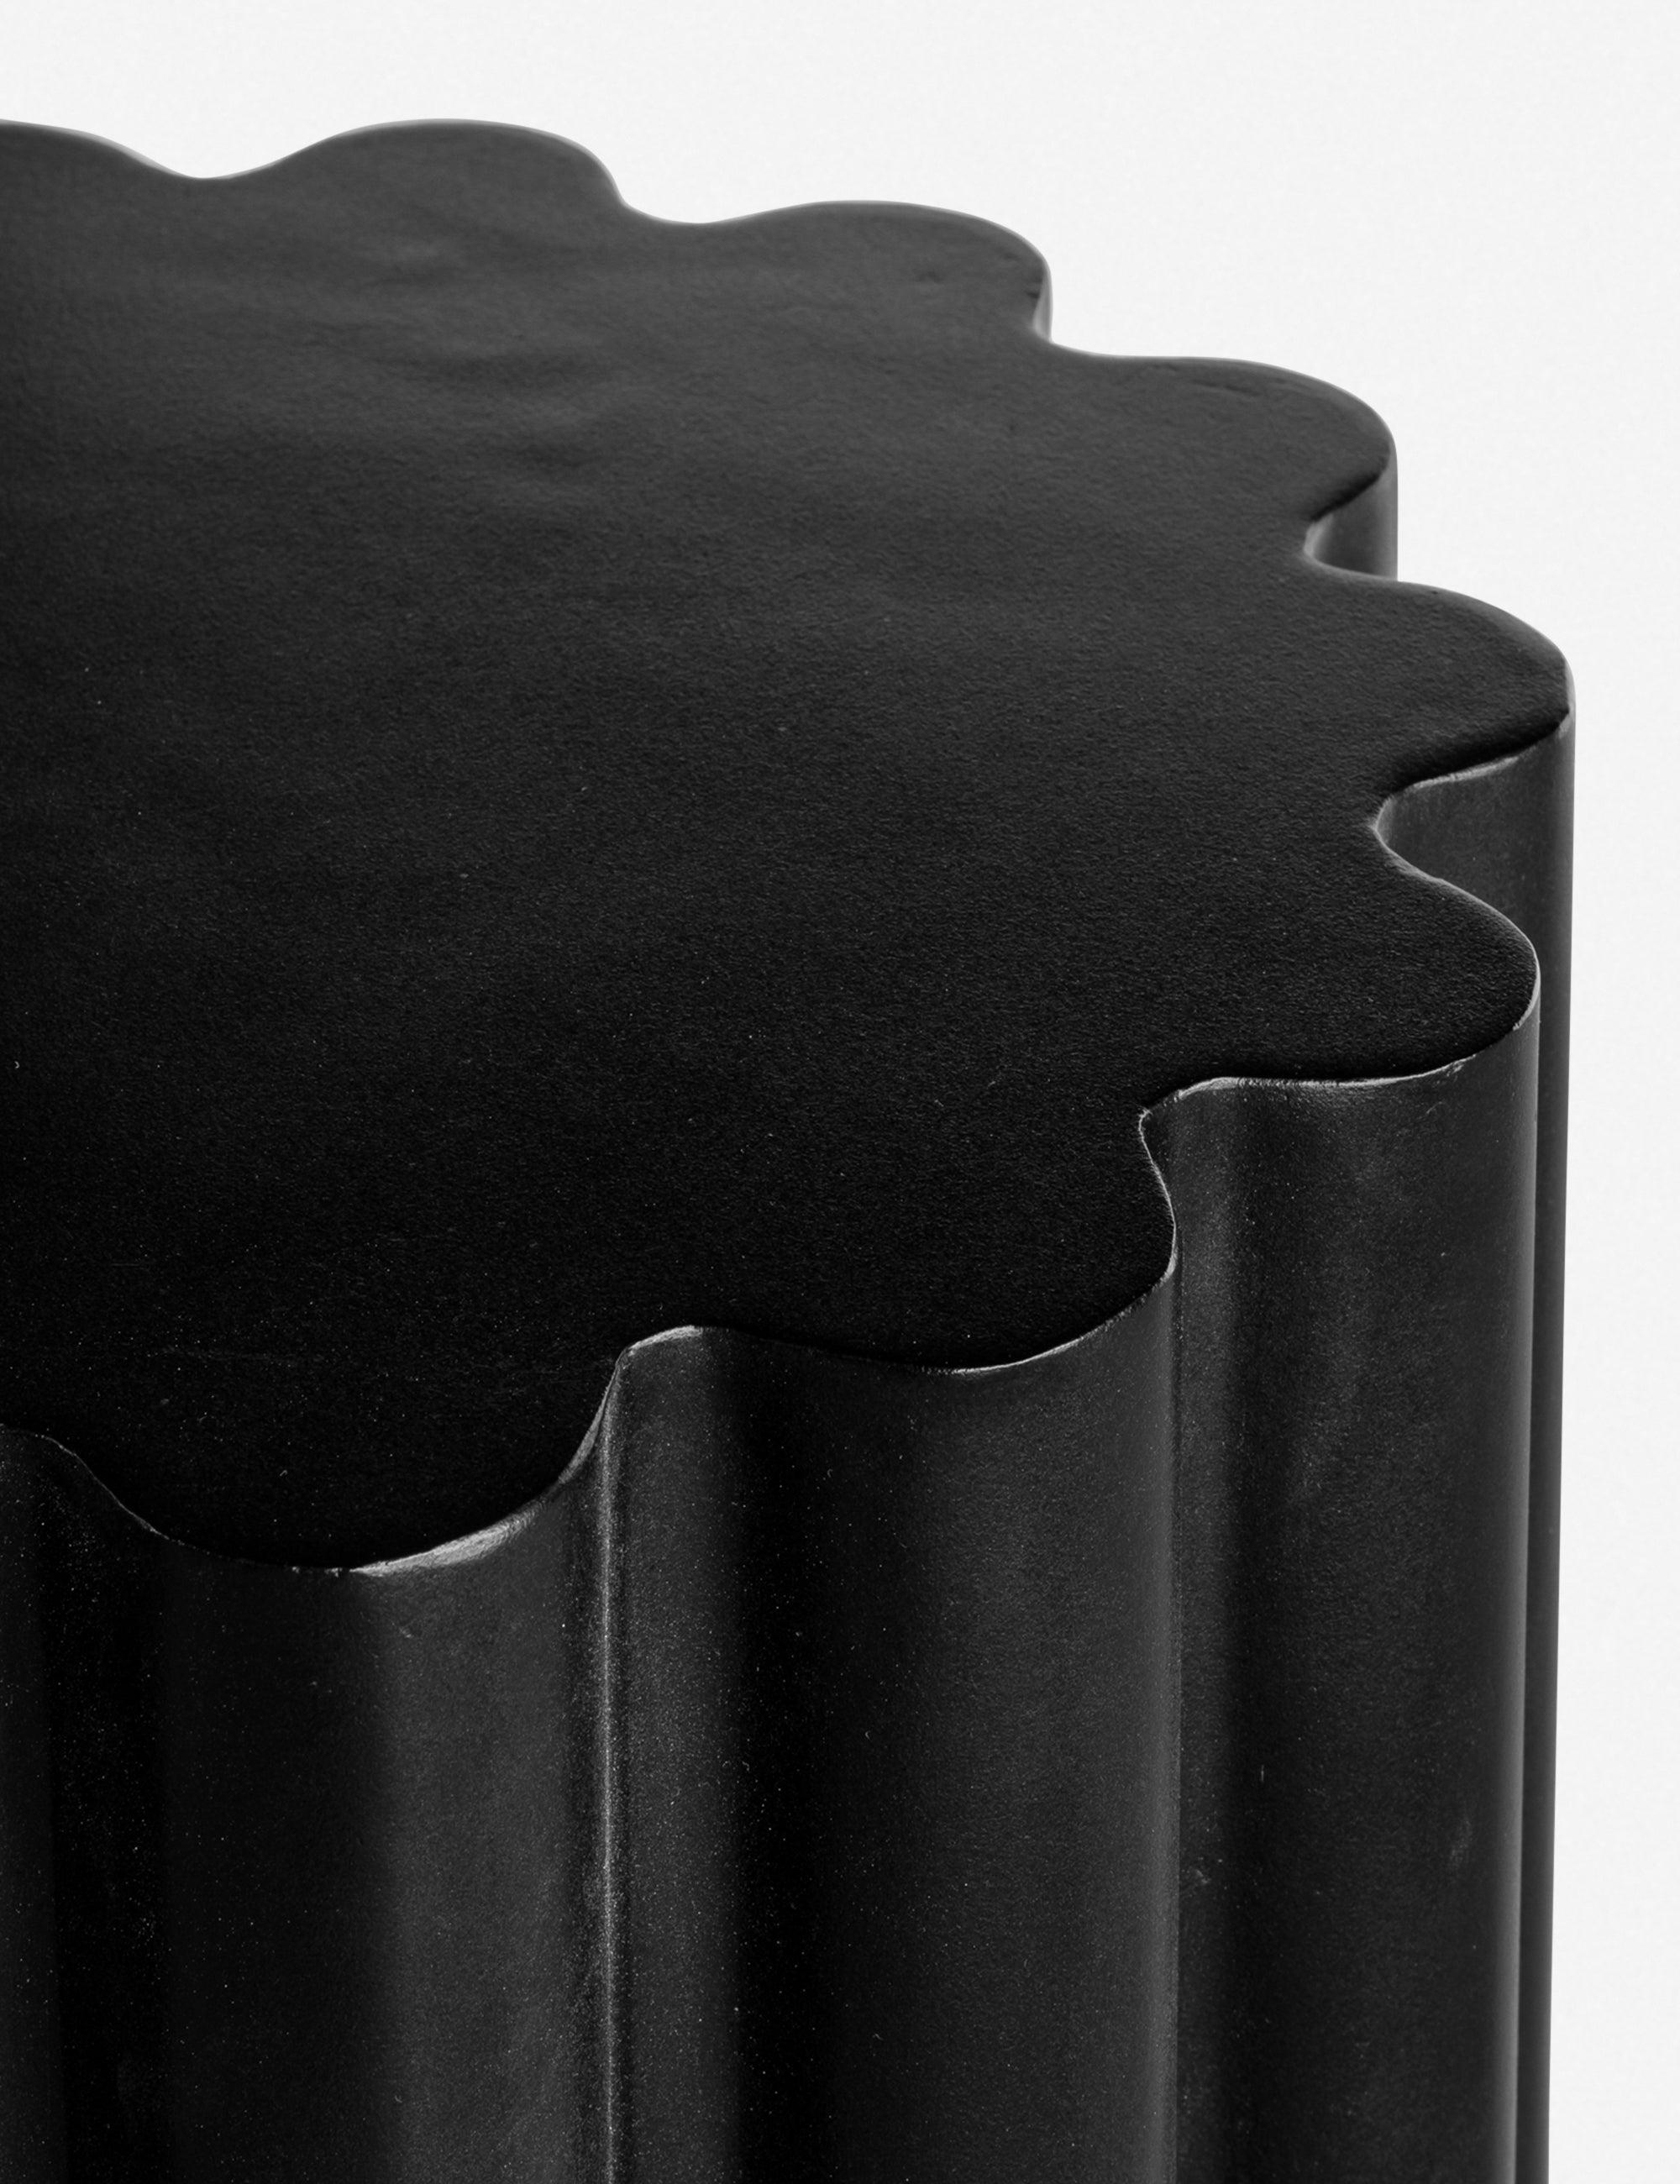 Sculptural Black Concrete Indoor/Outdoor Side Table